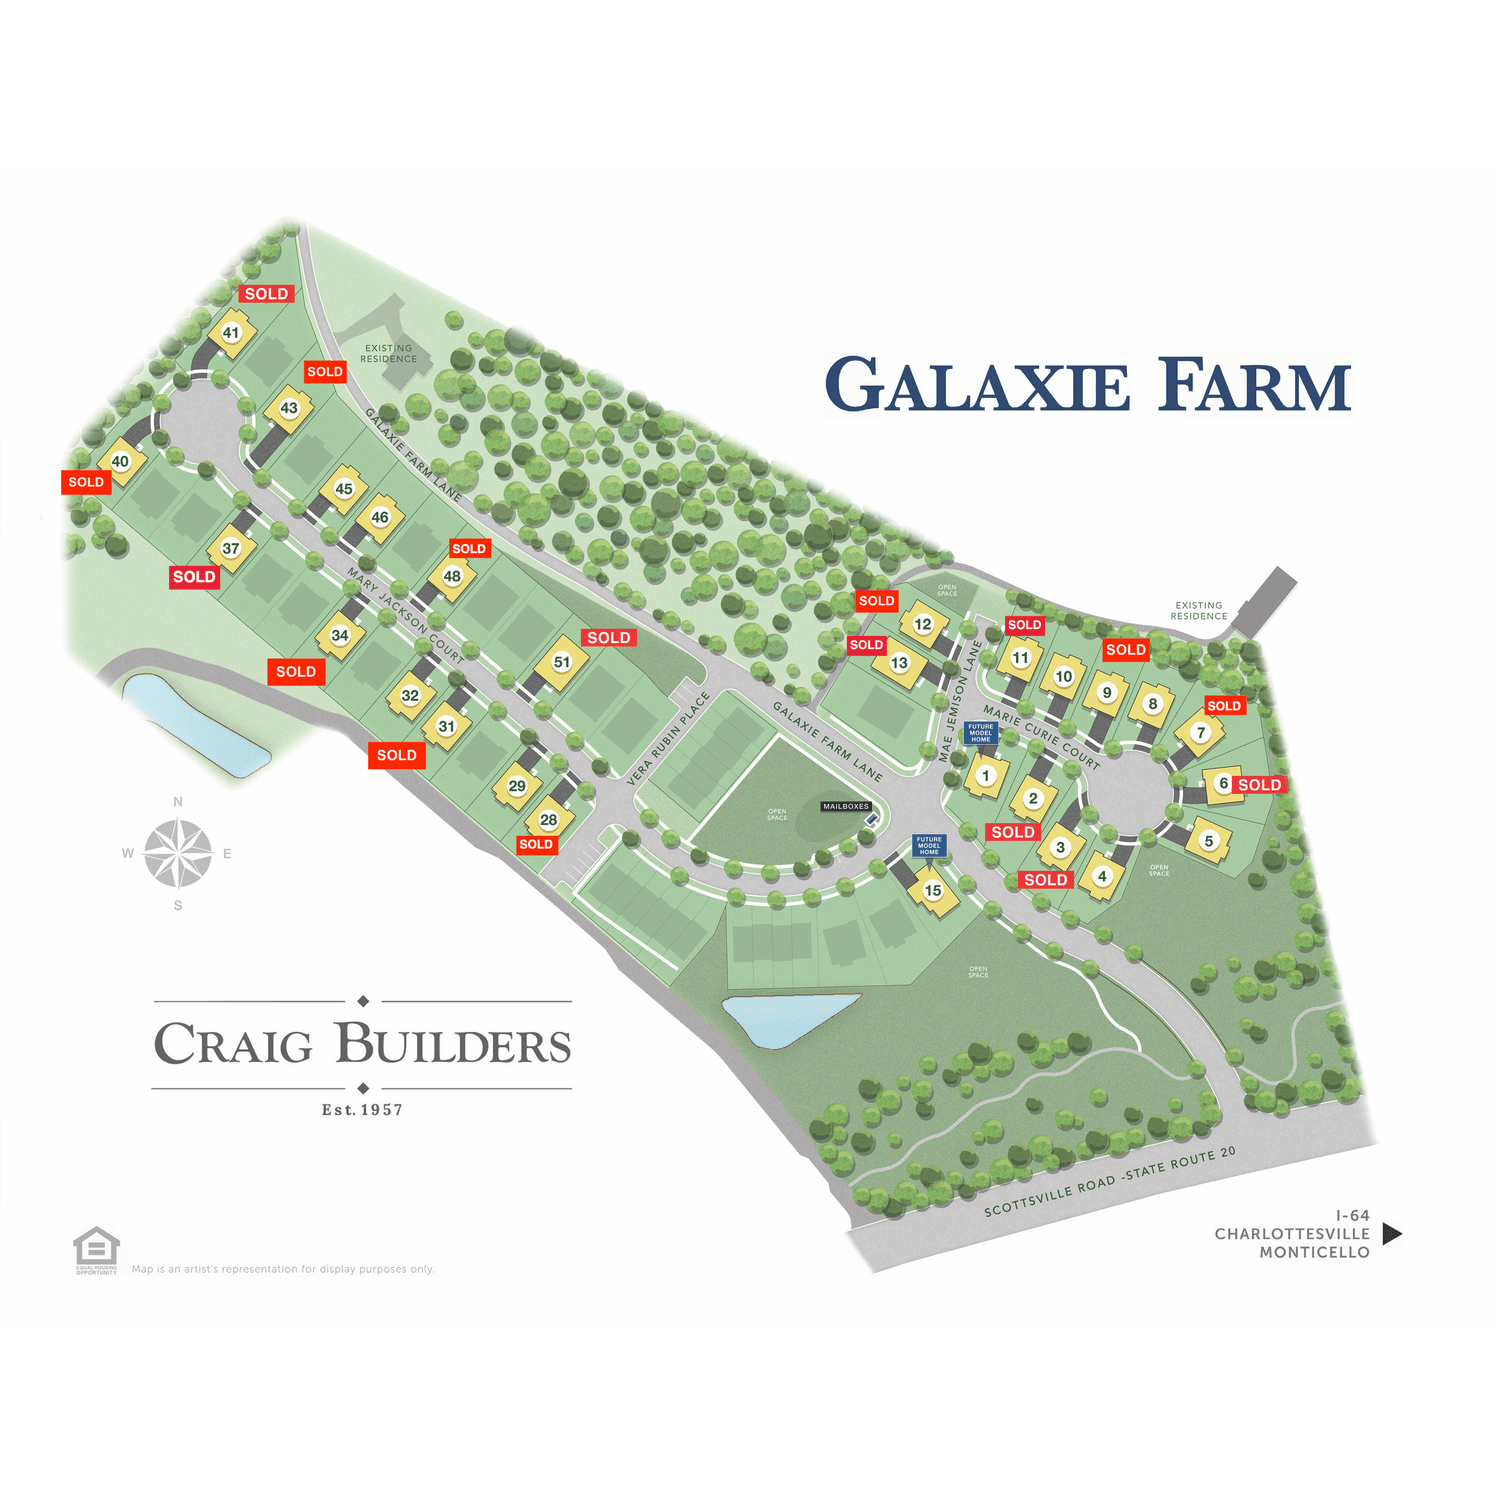 12. Galaxie Farm здание в 4006 Marie Curie Court, Charlottesville, VA 22902